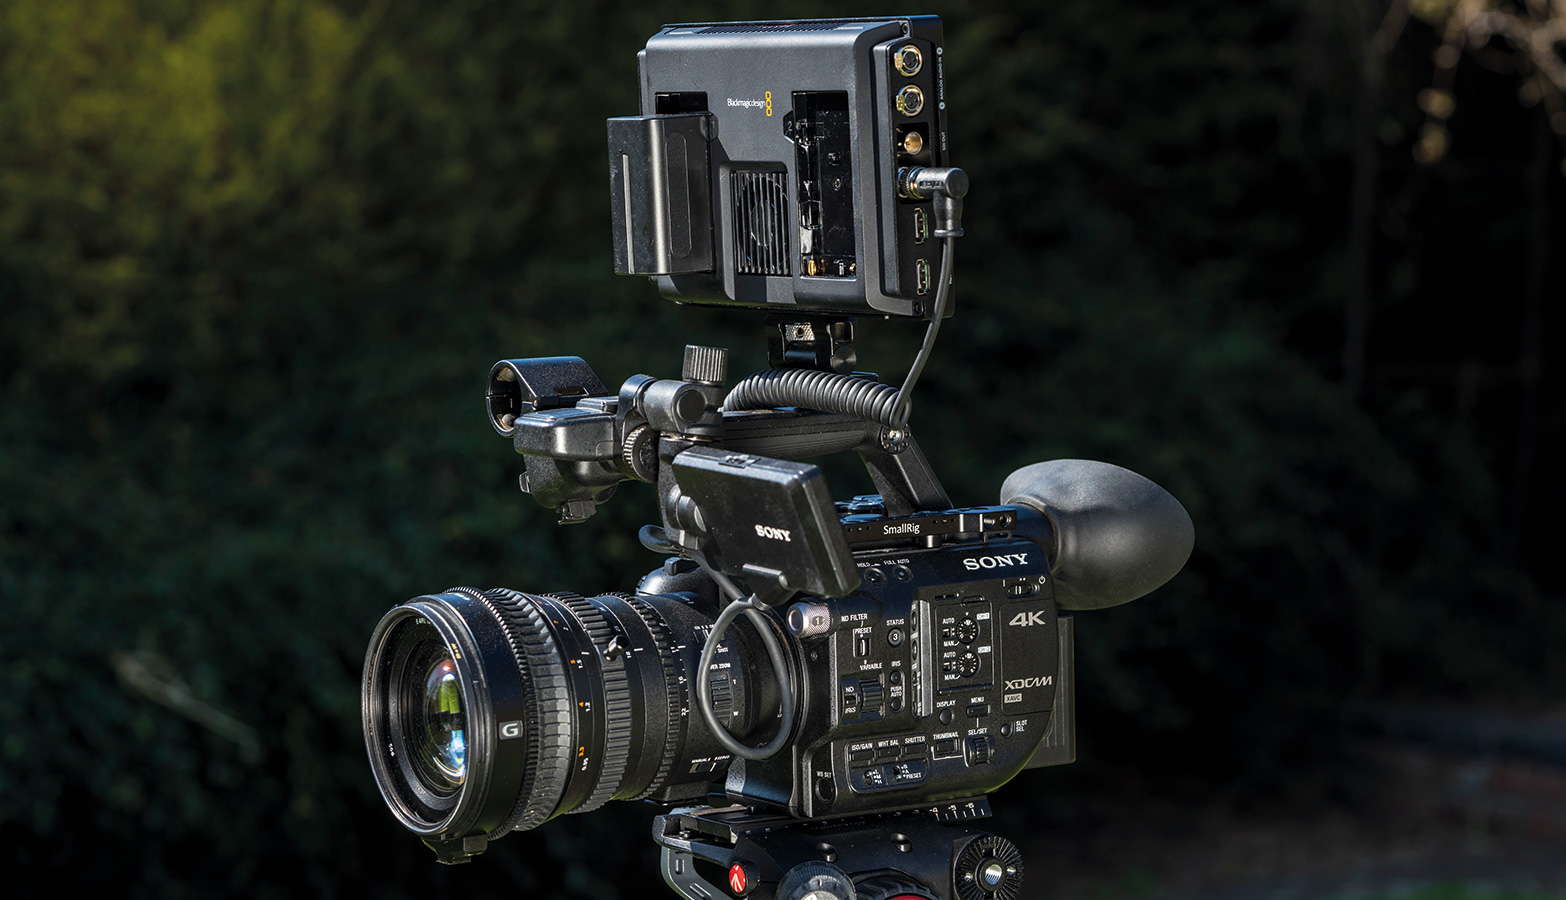 Mini test: Blackmagic video assist 7in 12g HDR - Pro Moviemaker